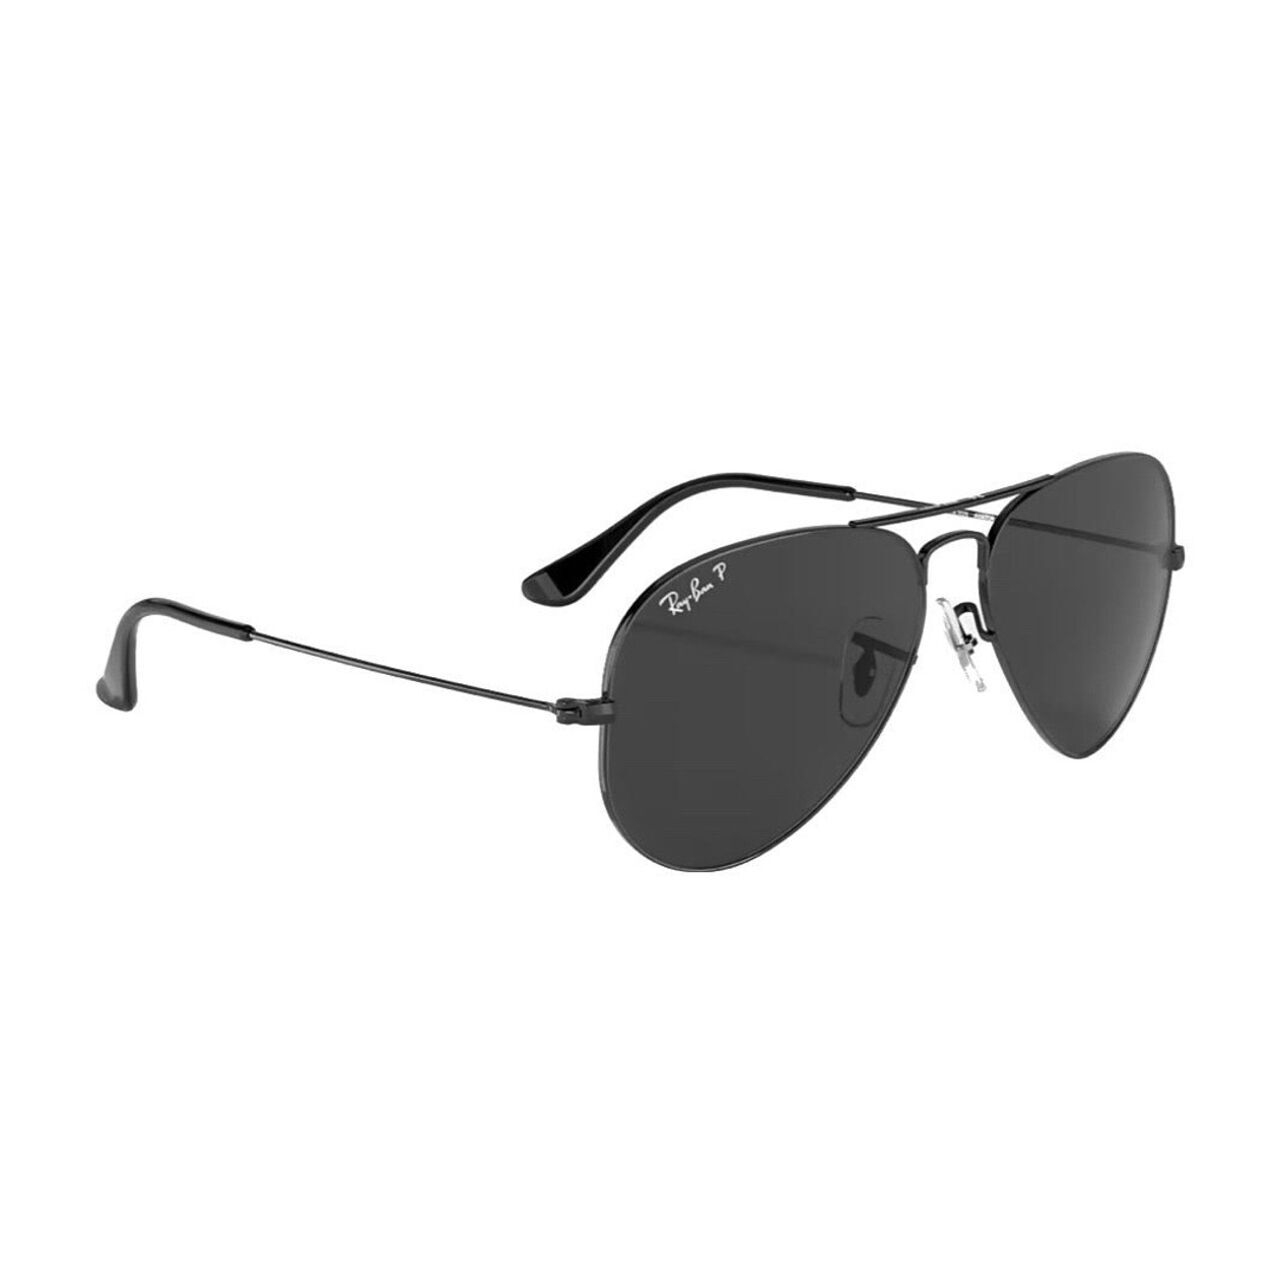 Ray-ban Aviator Large Metal Black Sunglasses